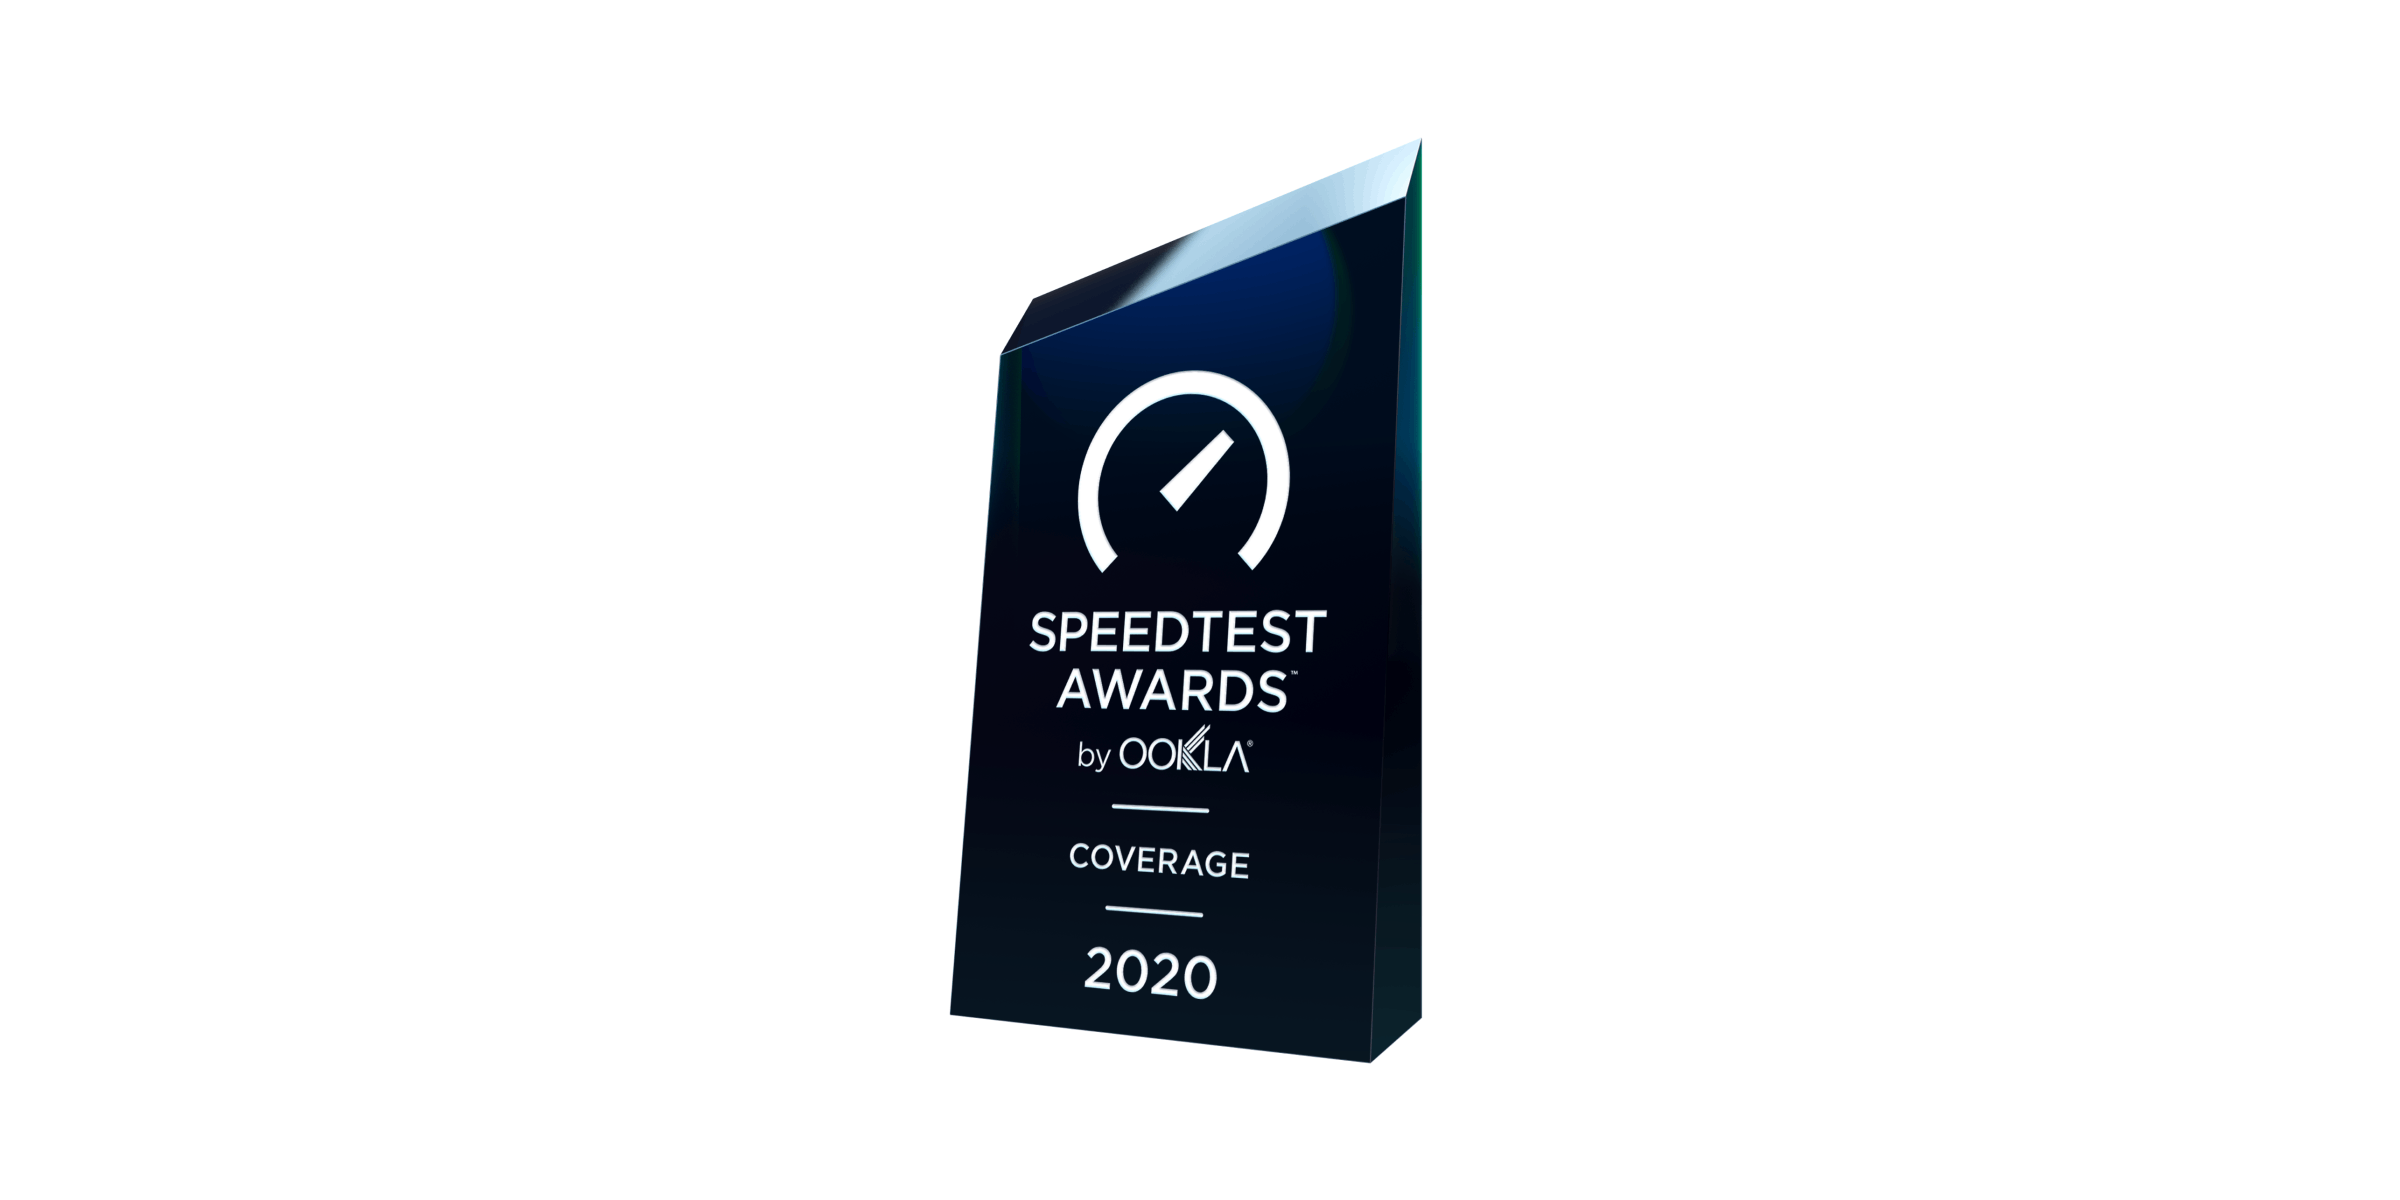 Speedtest awards coverage 2020